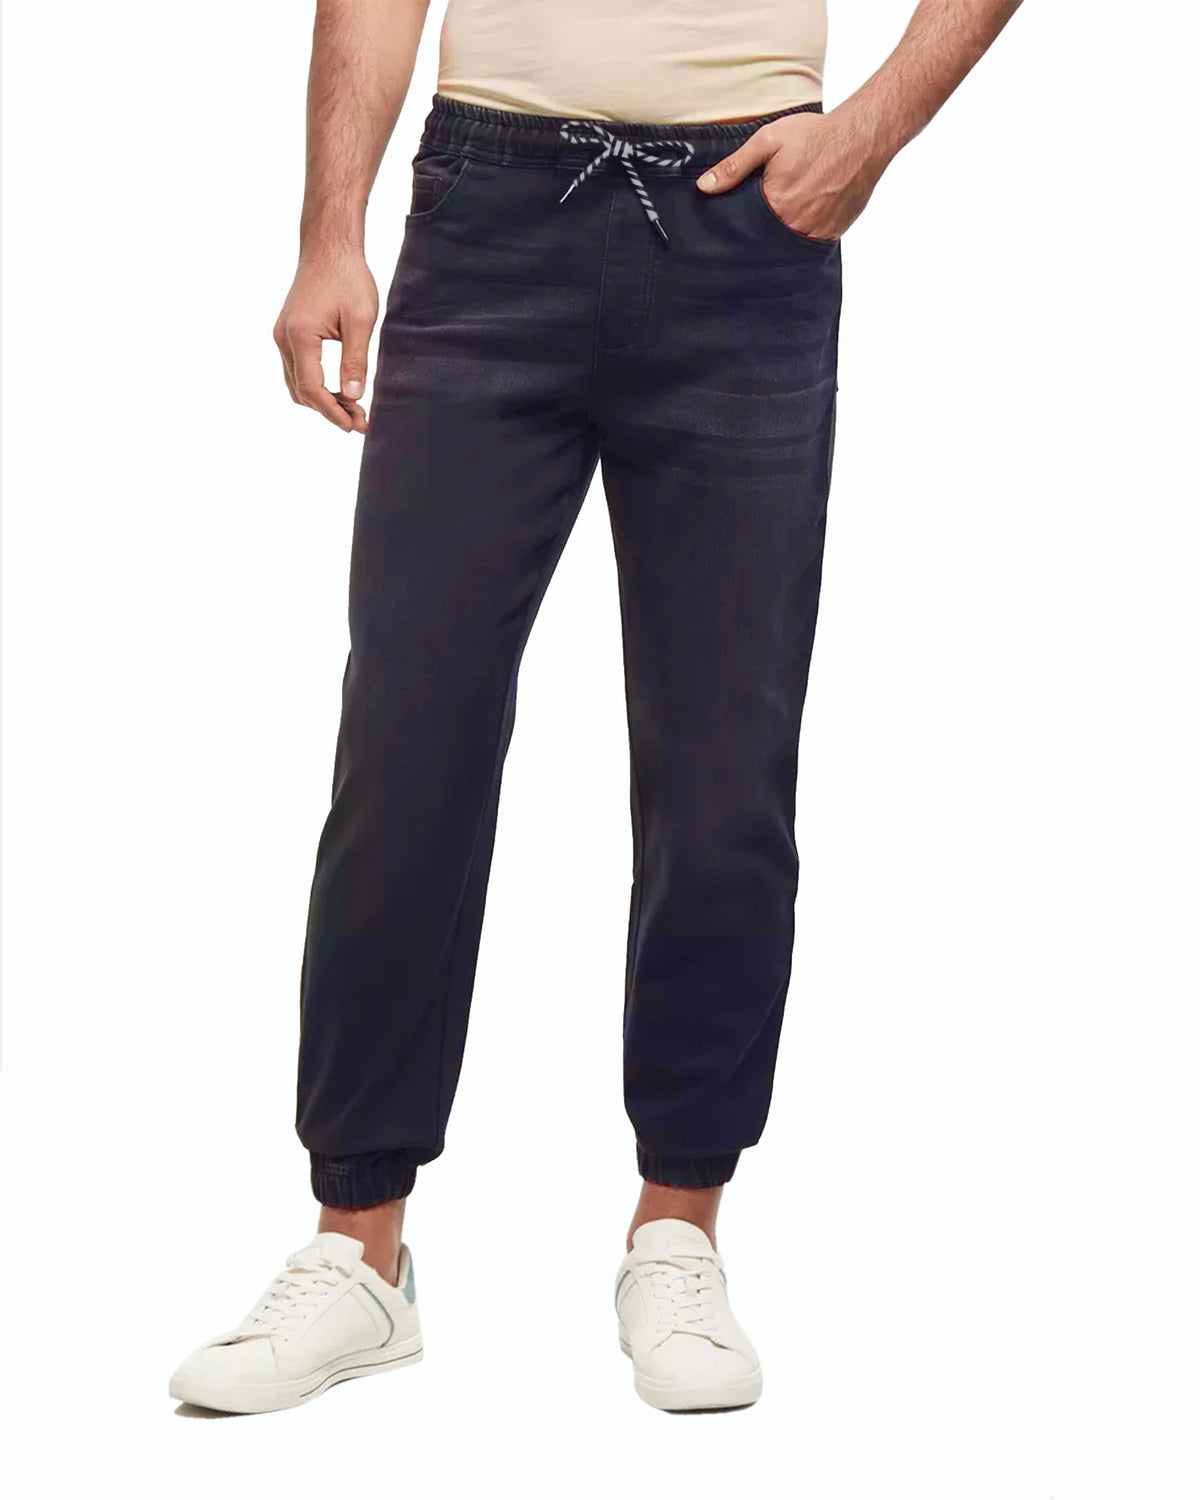 Men's Solid Jeans Jogger